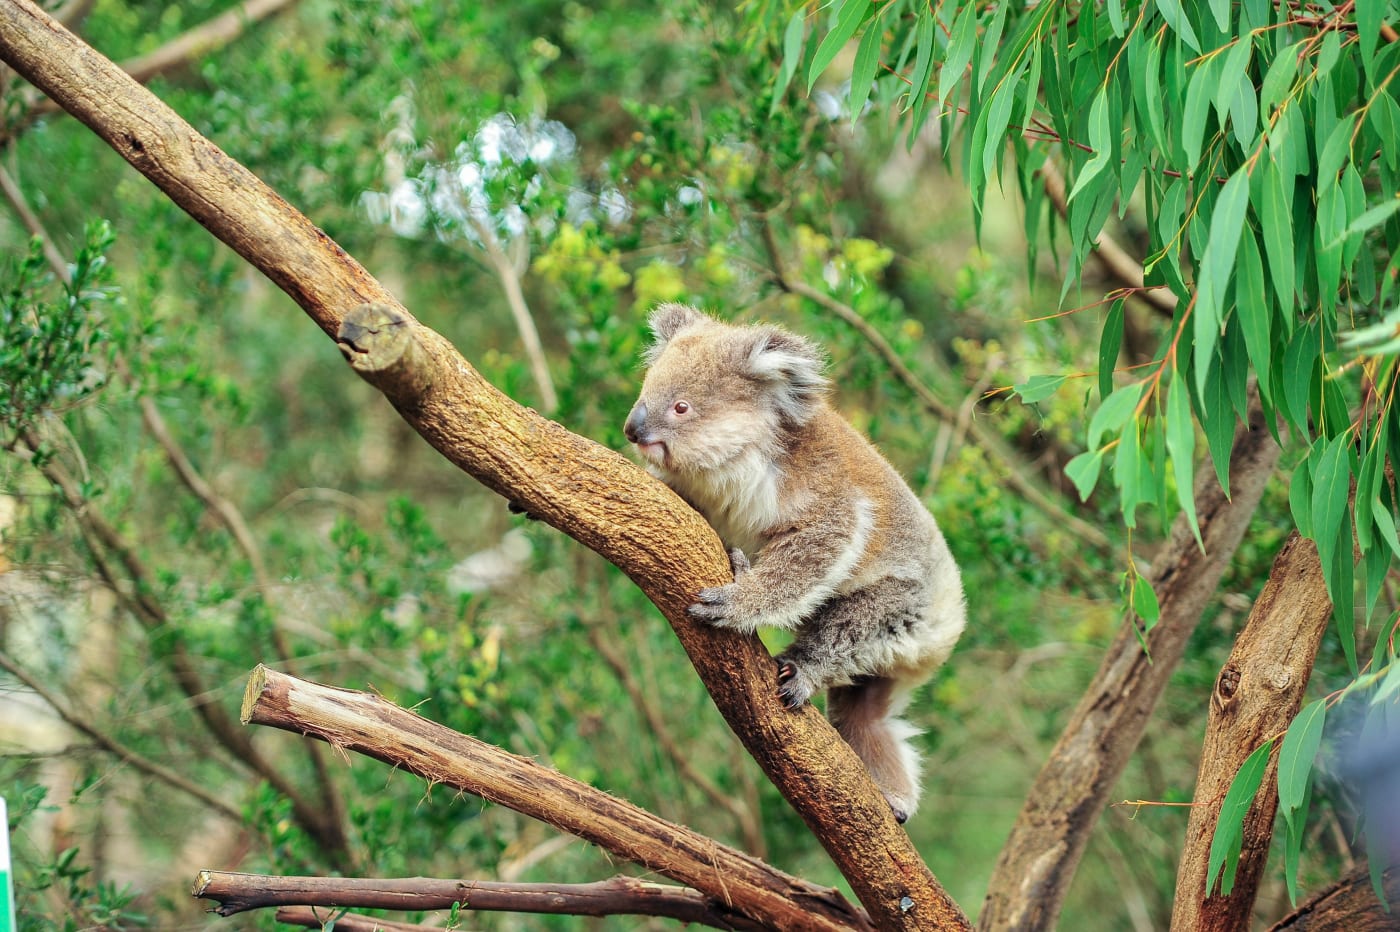 A wild koala (Phascolarctos cinereus) climbing in its natural habitat of gum trees